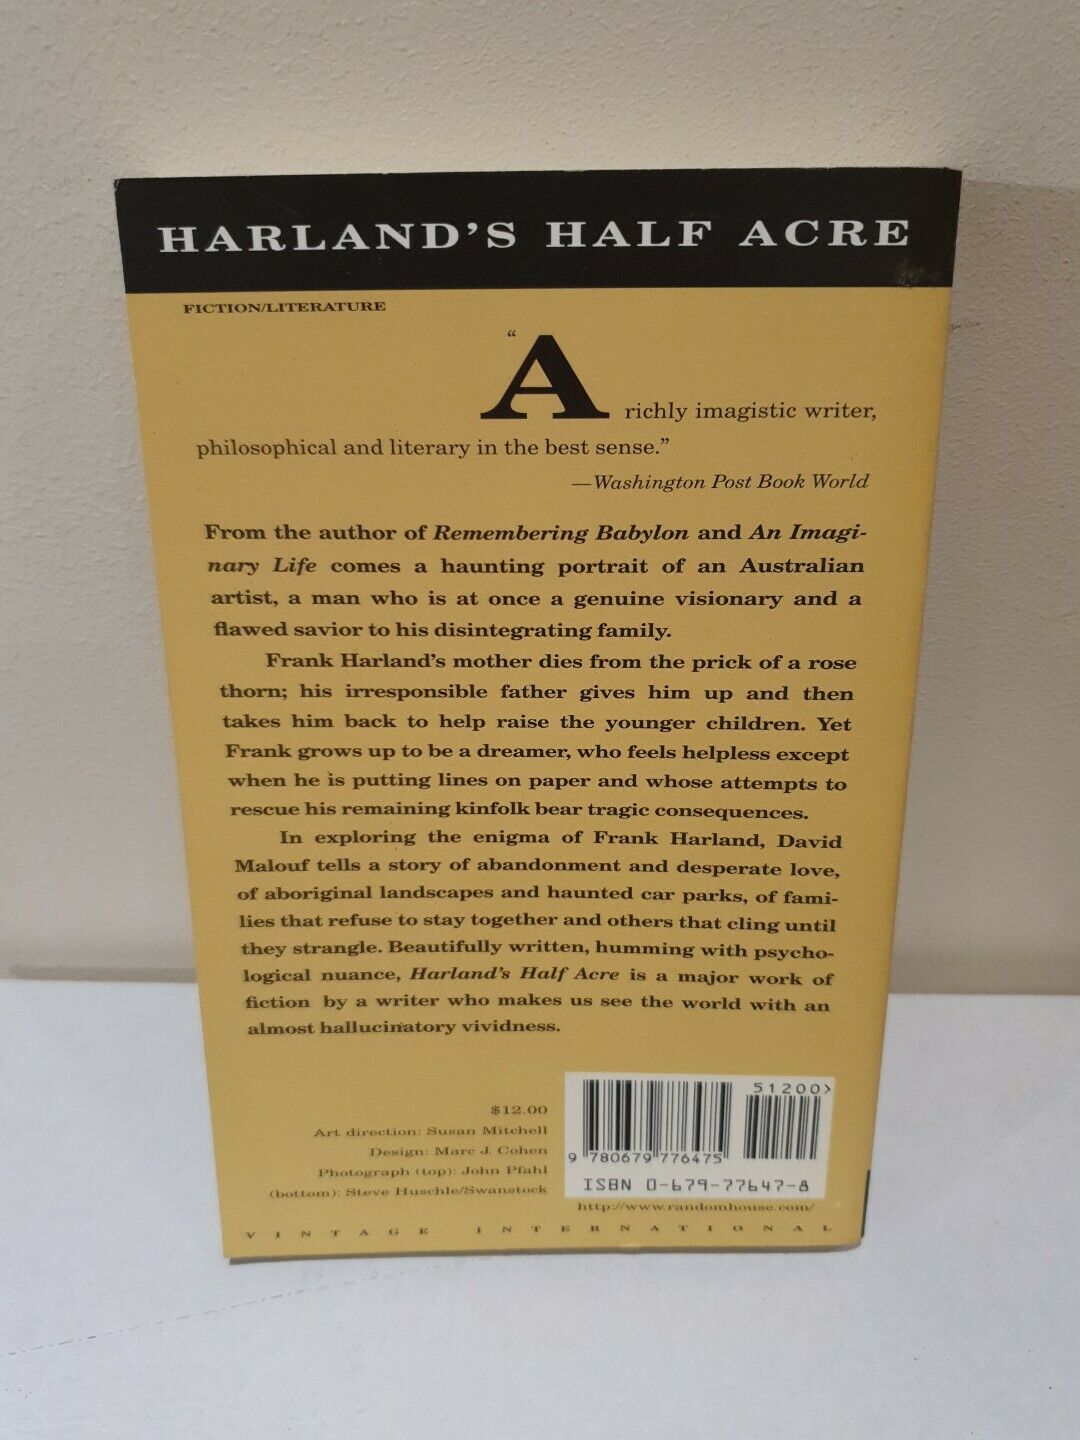 Harland's Half Acre by David Malour